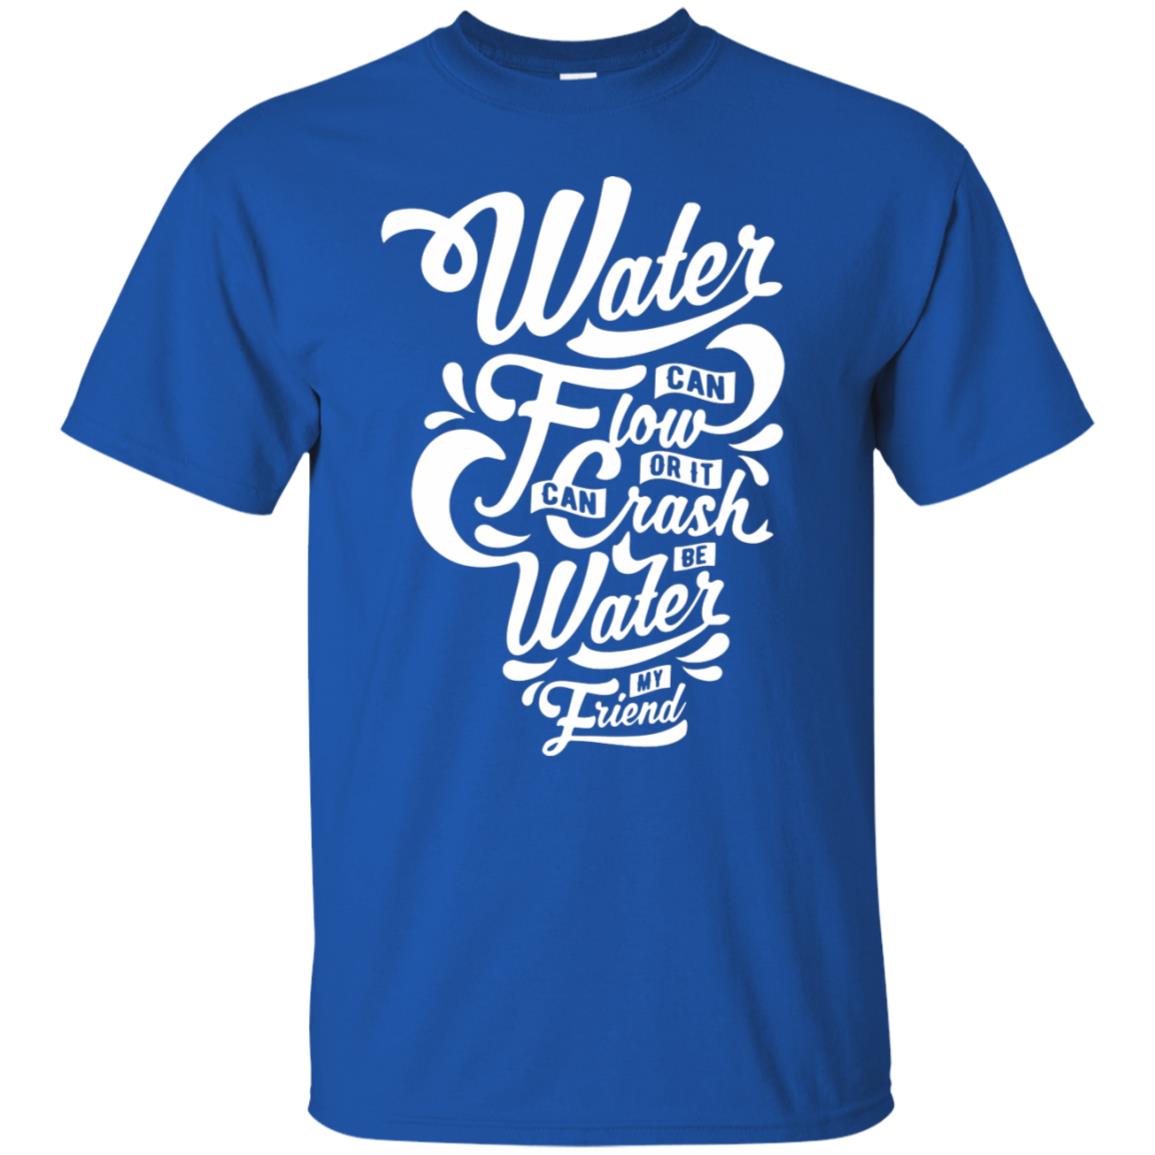 Be Water My Friend Tshirt - 10% Off - FavorMerch